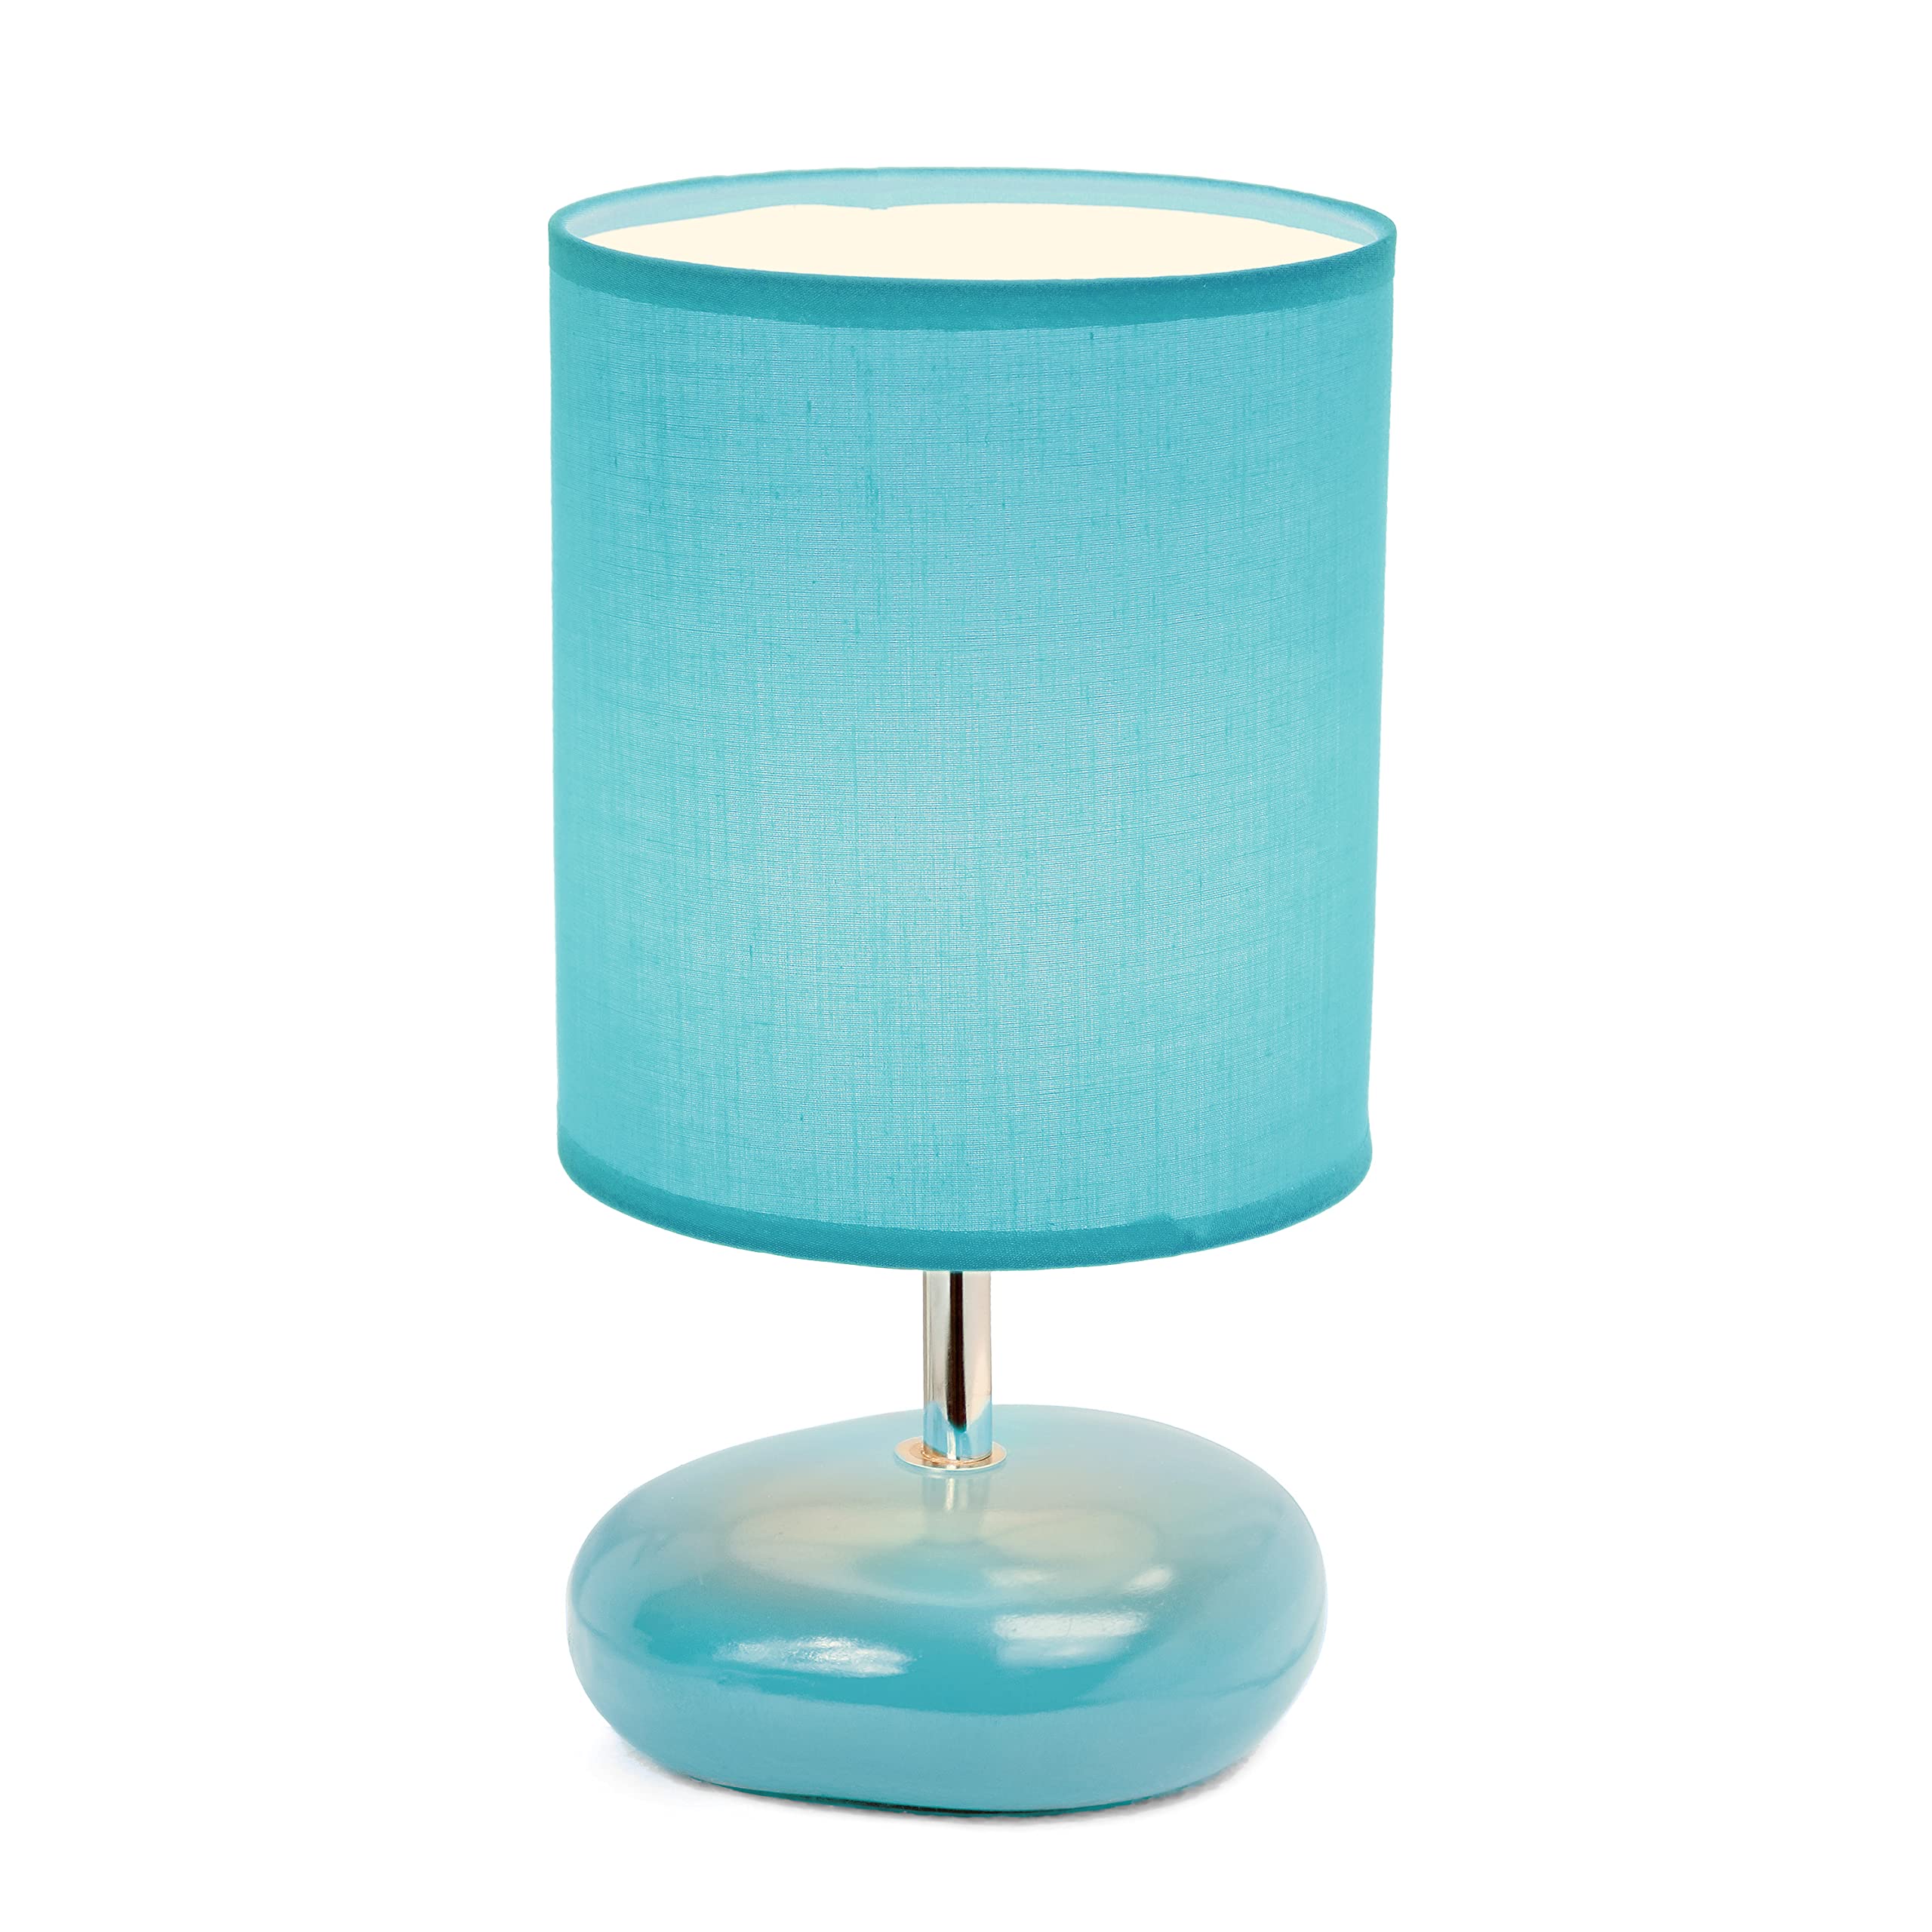 Simple Designs LT2005-BLU Stonies Small Stone Look Table Lamp, Blue 5.51 x 5.51 x 10.24